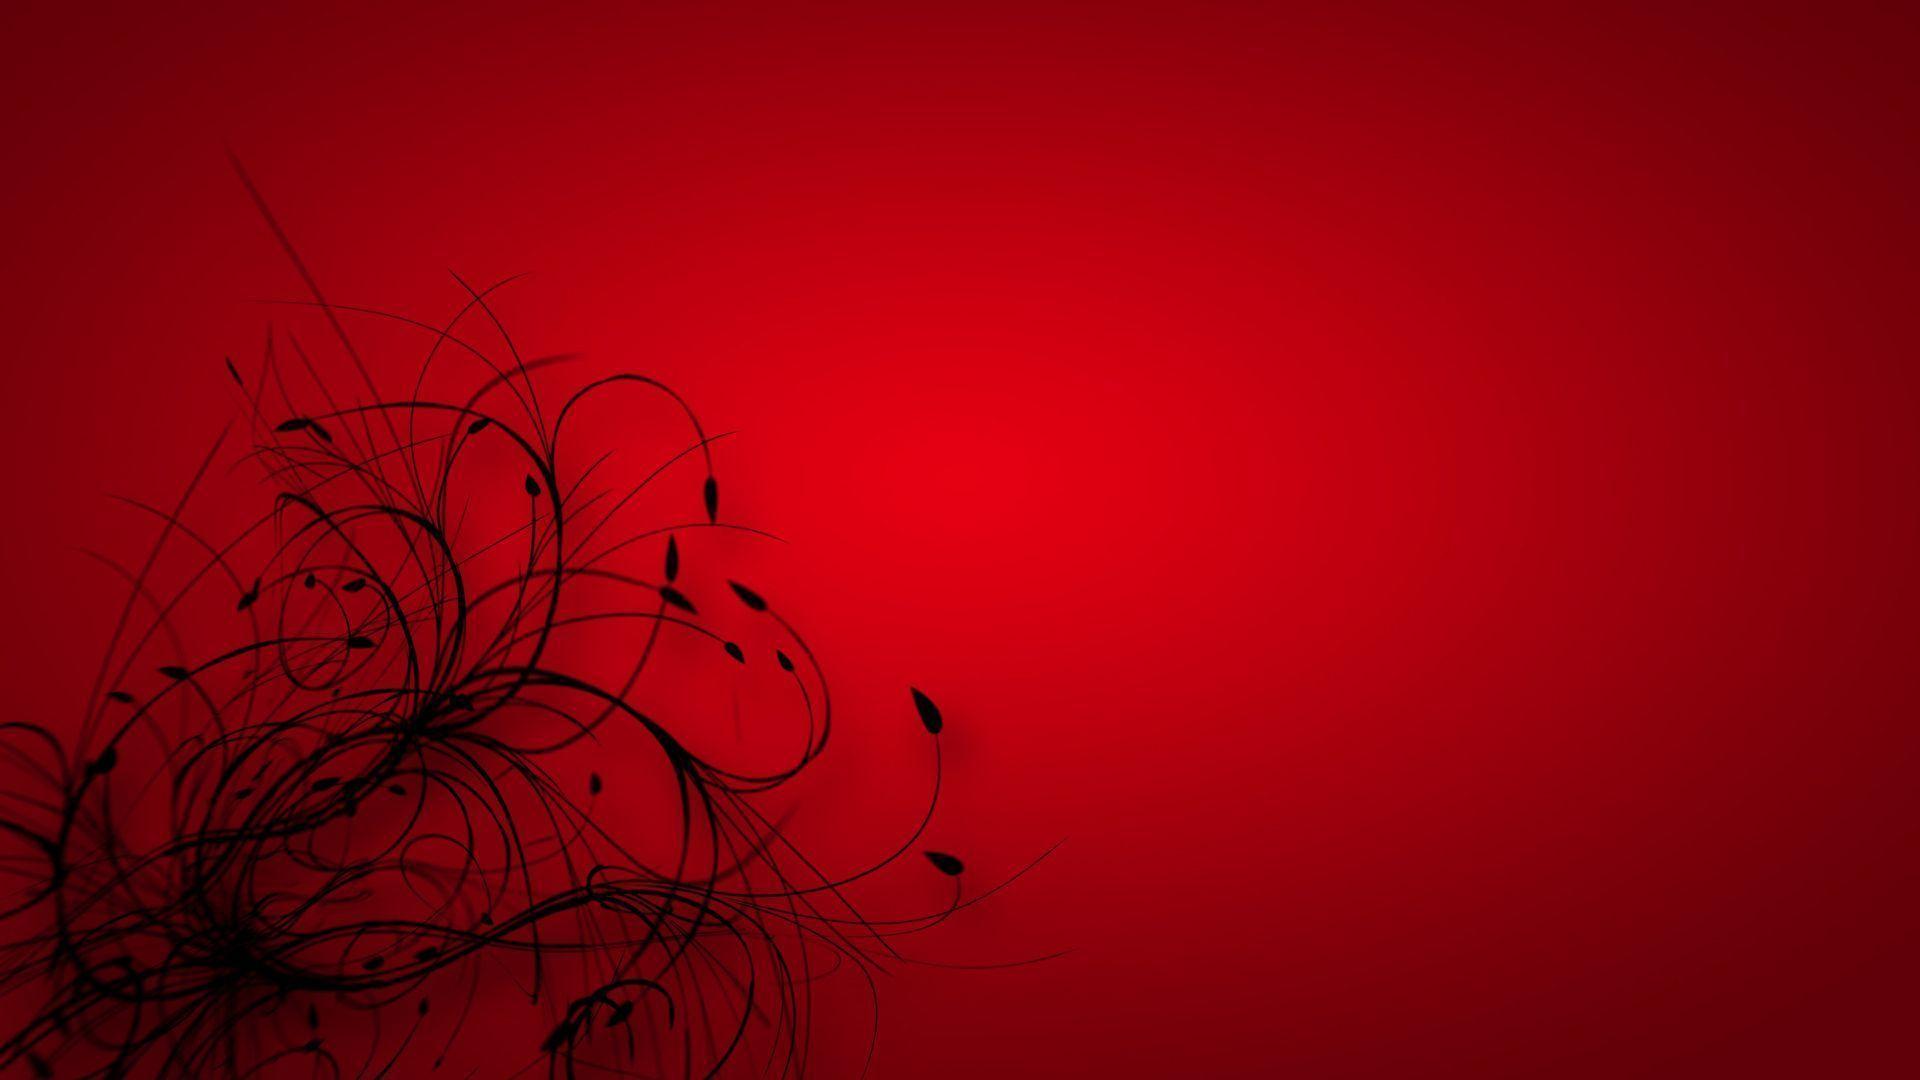 Red HD Wallpaper Background Download Free For Desktop